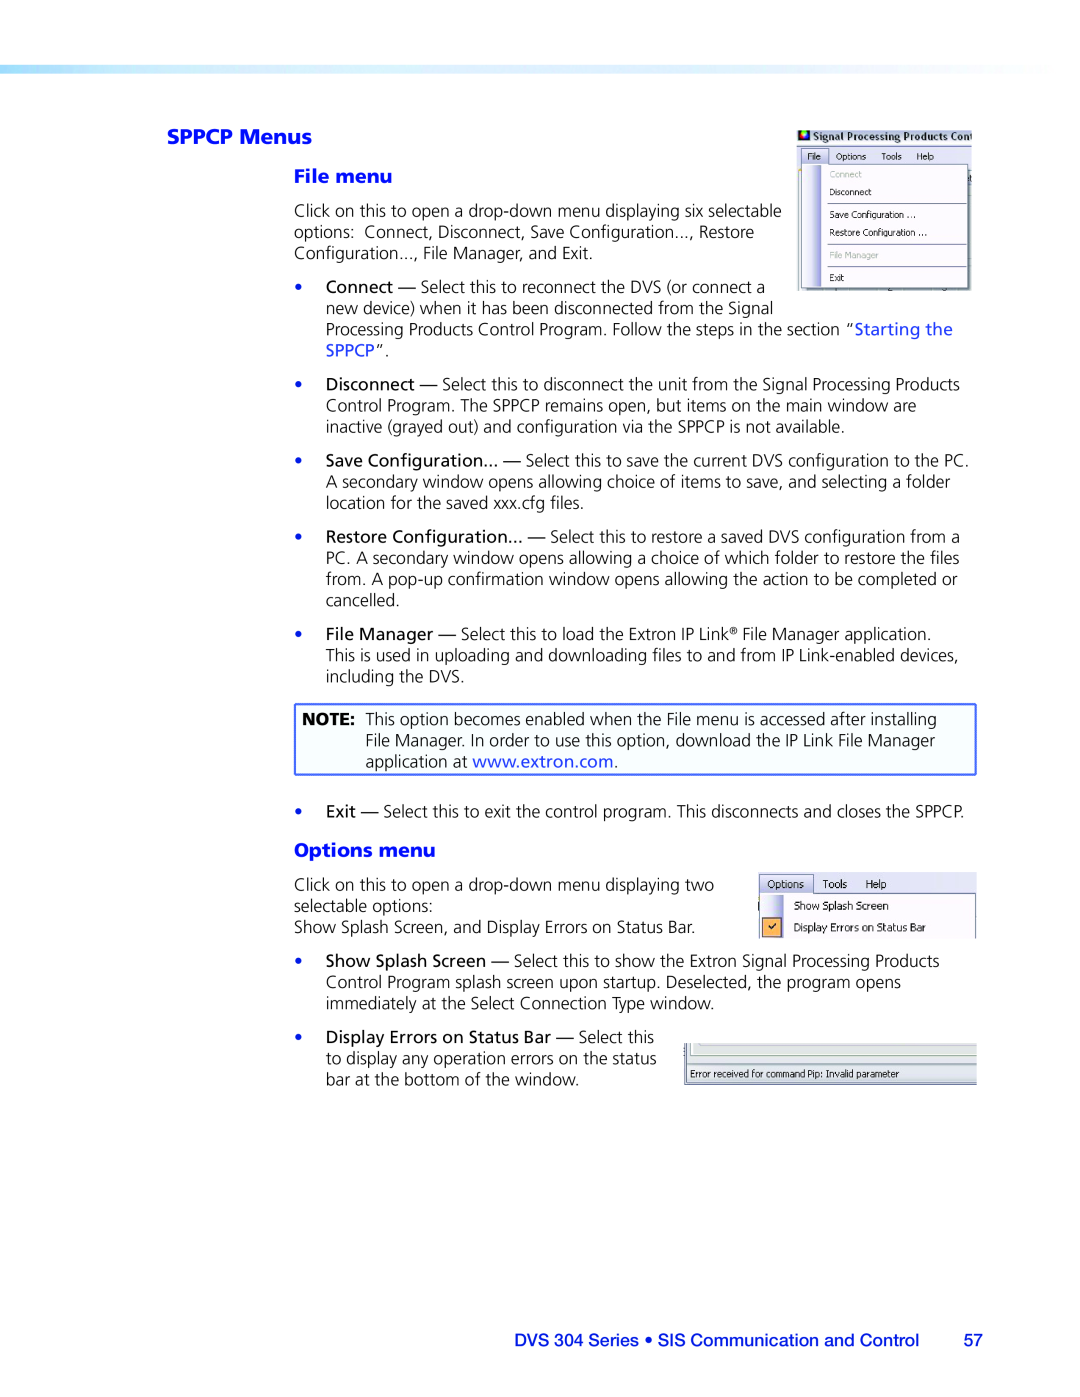 Extron electronic manual SPPCP Menus, File menu, Options menu, DVS 304 Series • SIS Communication and Control 